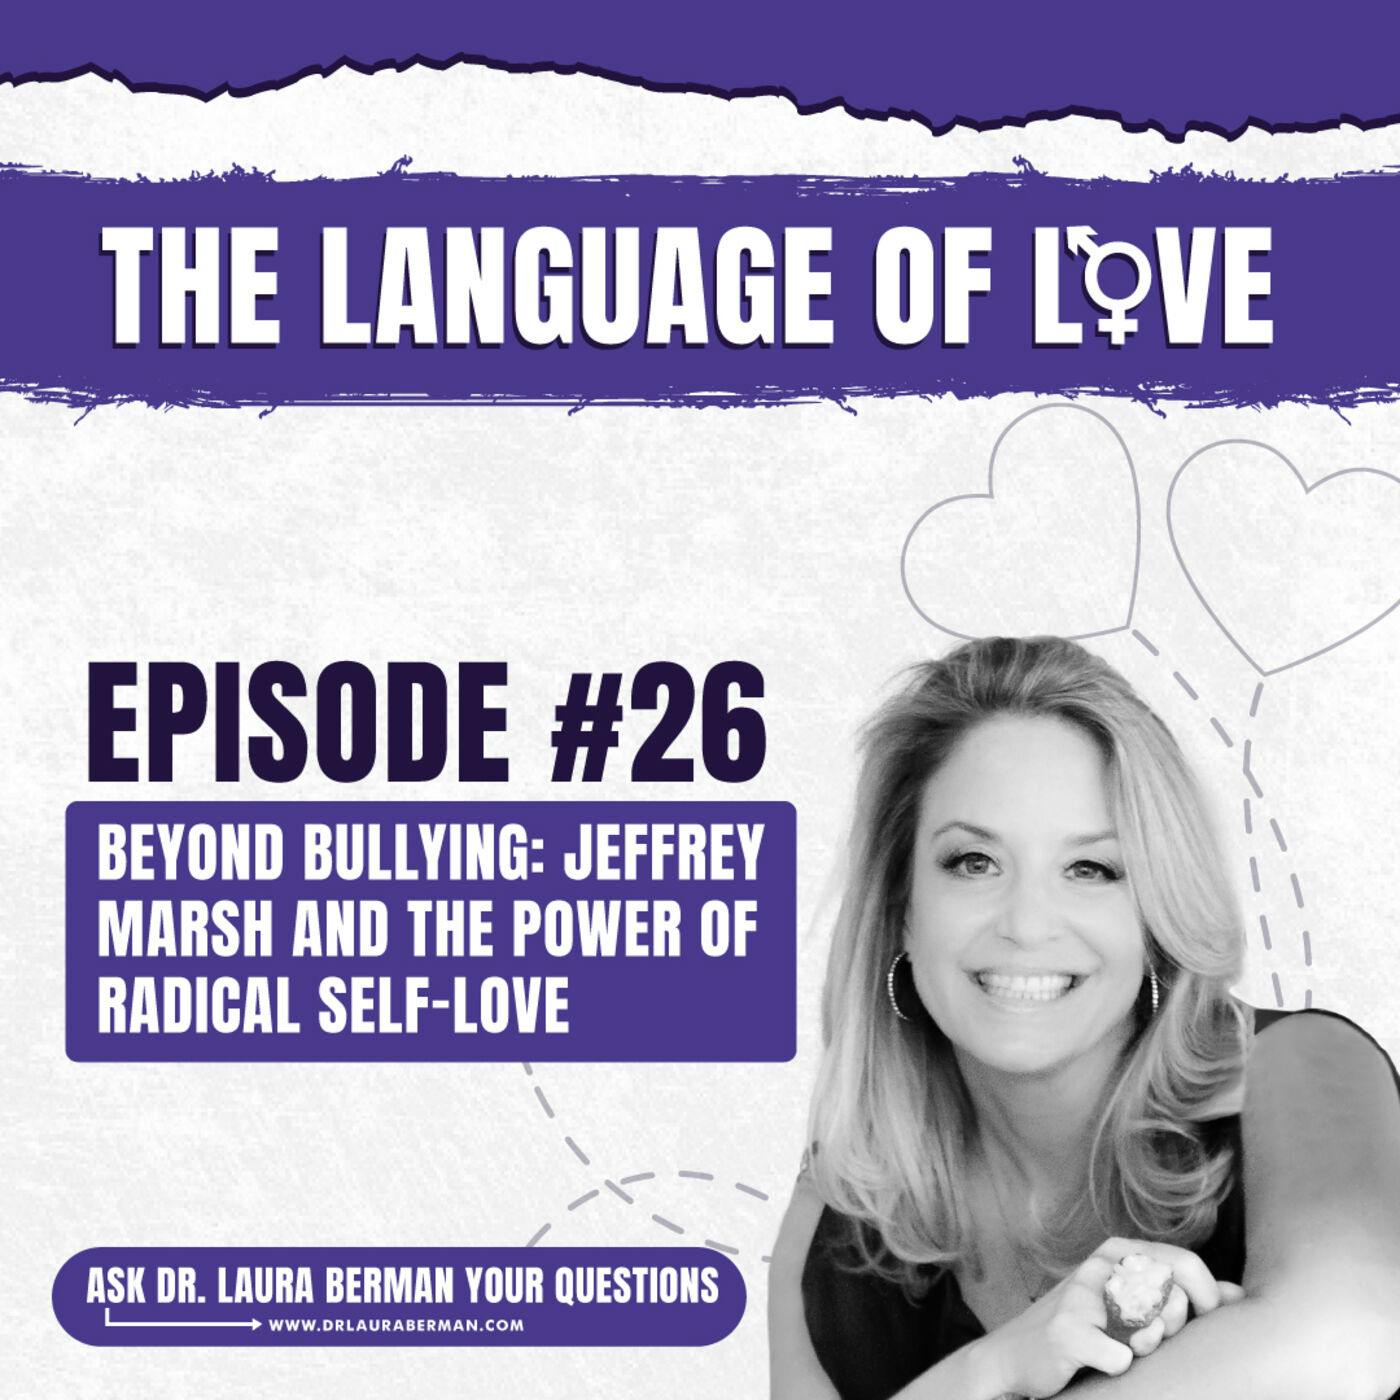 Beyond Bullying: Jeffrey Marsh and the Power of Radical Self-Love